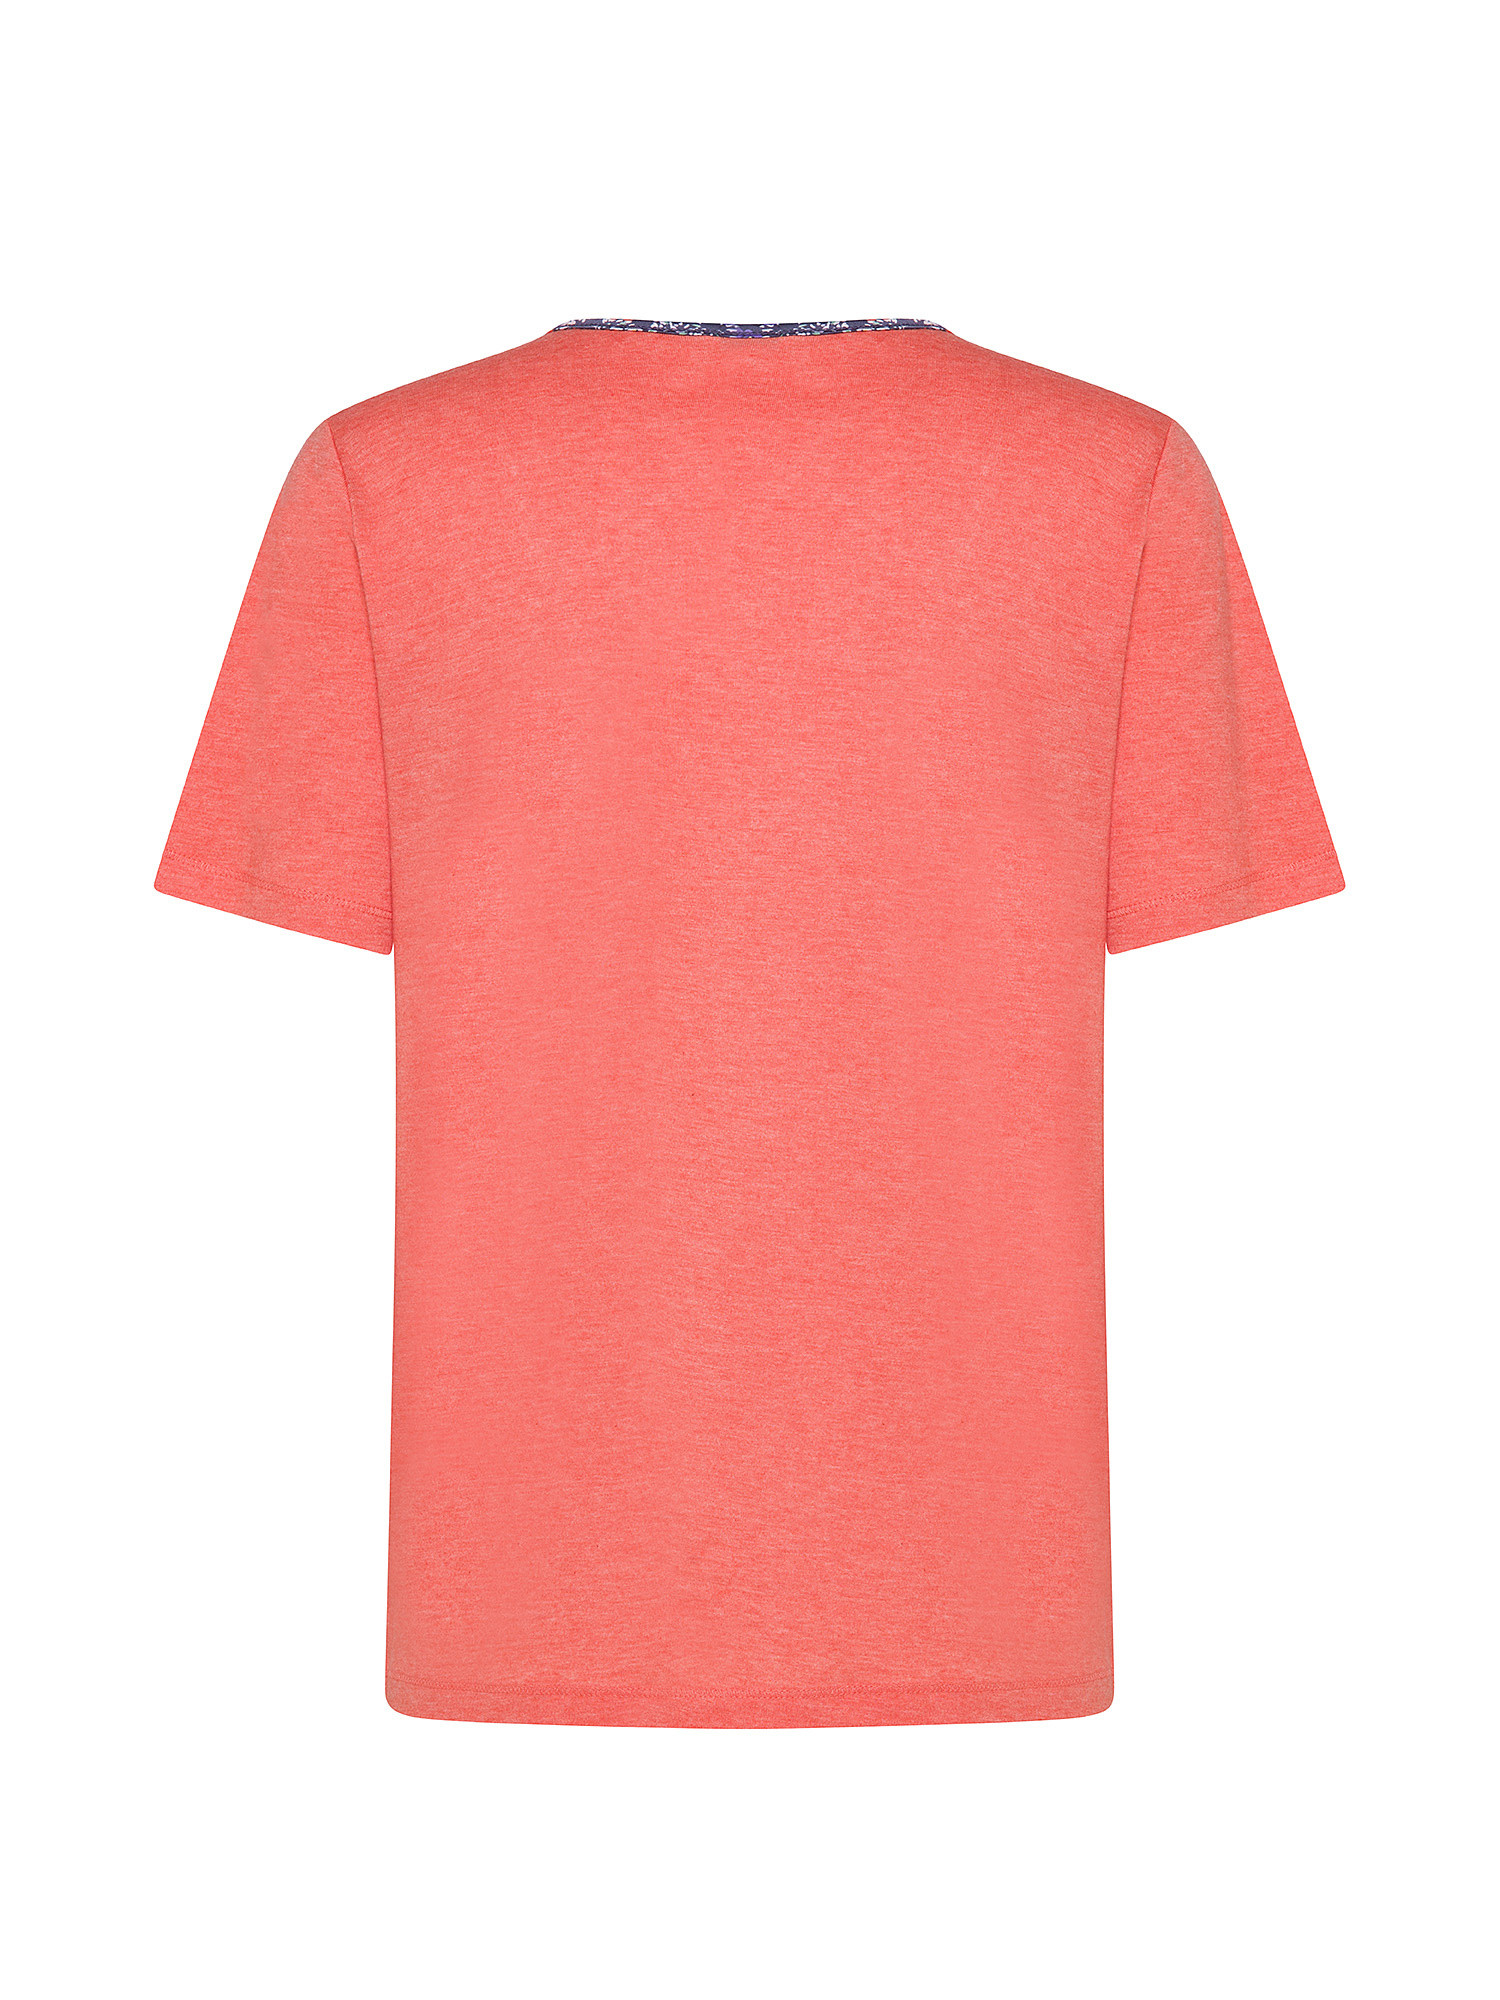 Esprit - T-shirt con scollo a V floreale, Grigio, large image number 1